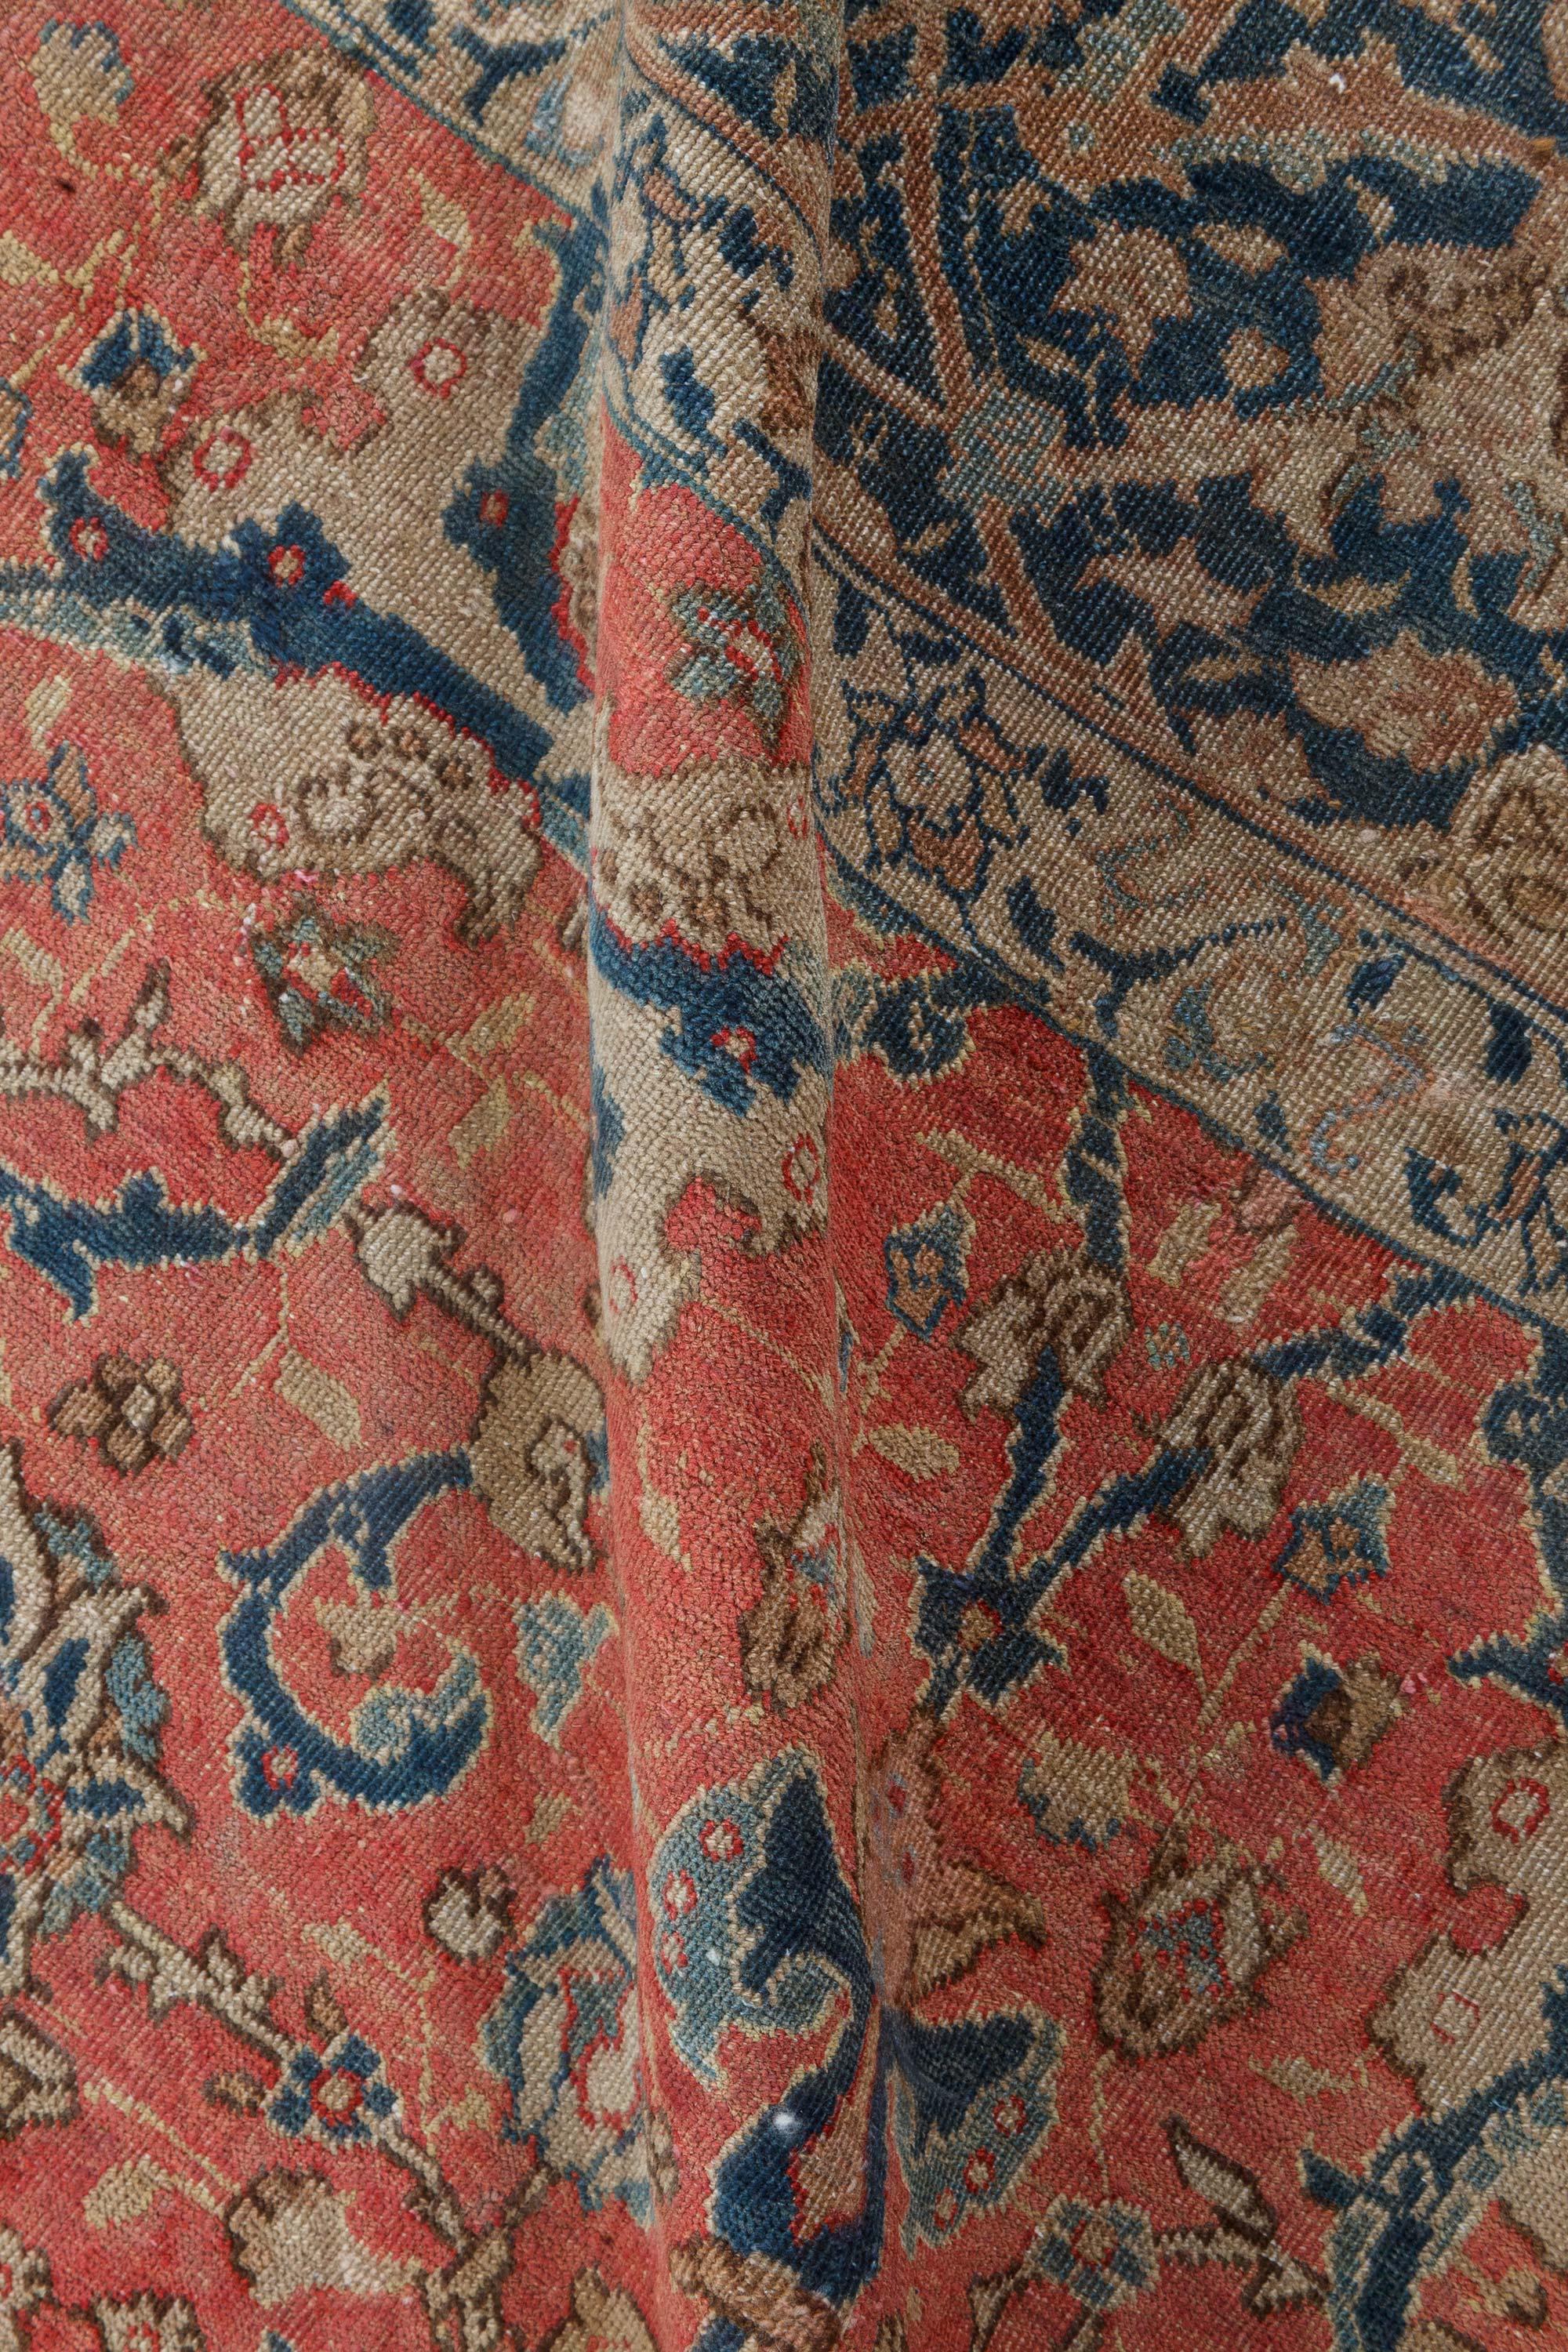 Authentic Persian Tabriz Pink Handmade Wool Rug
Size: 13'0